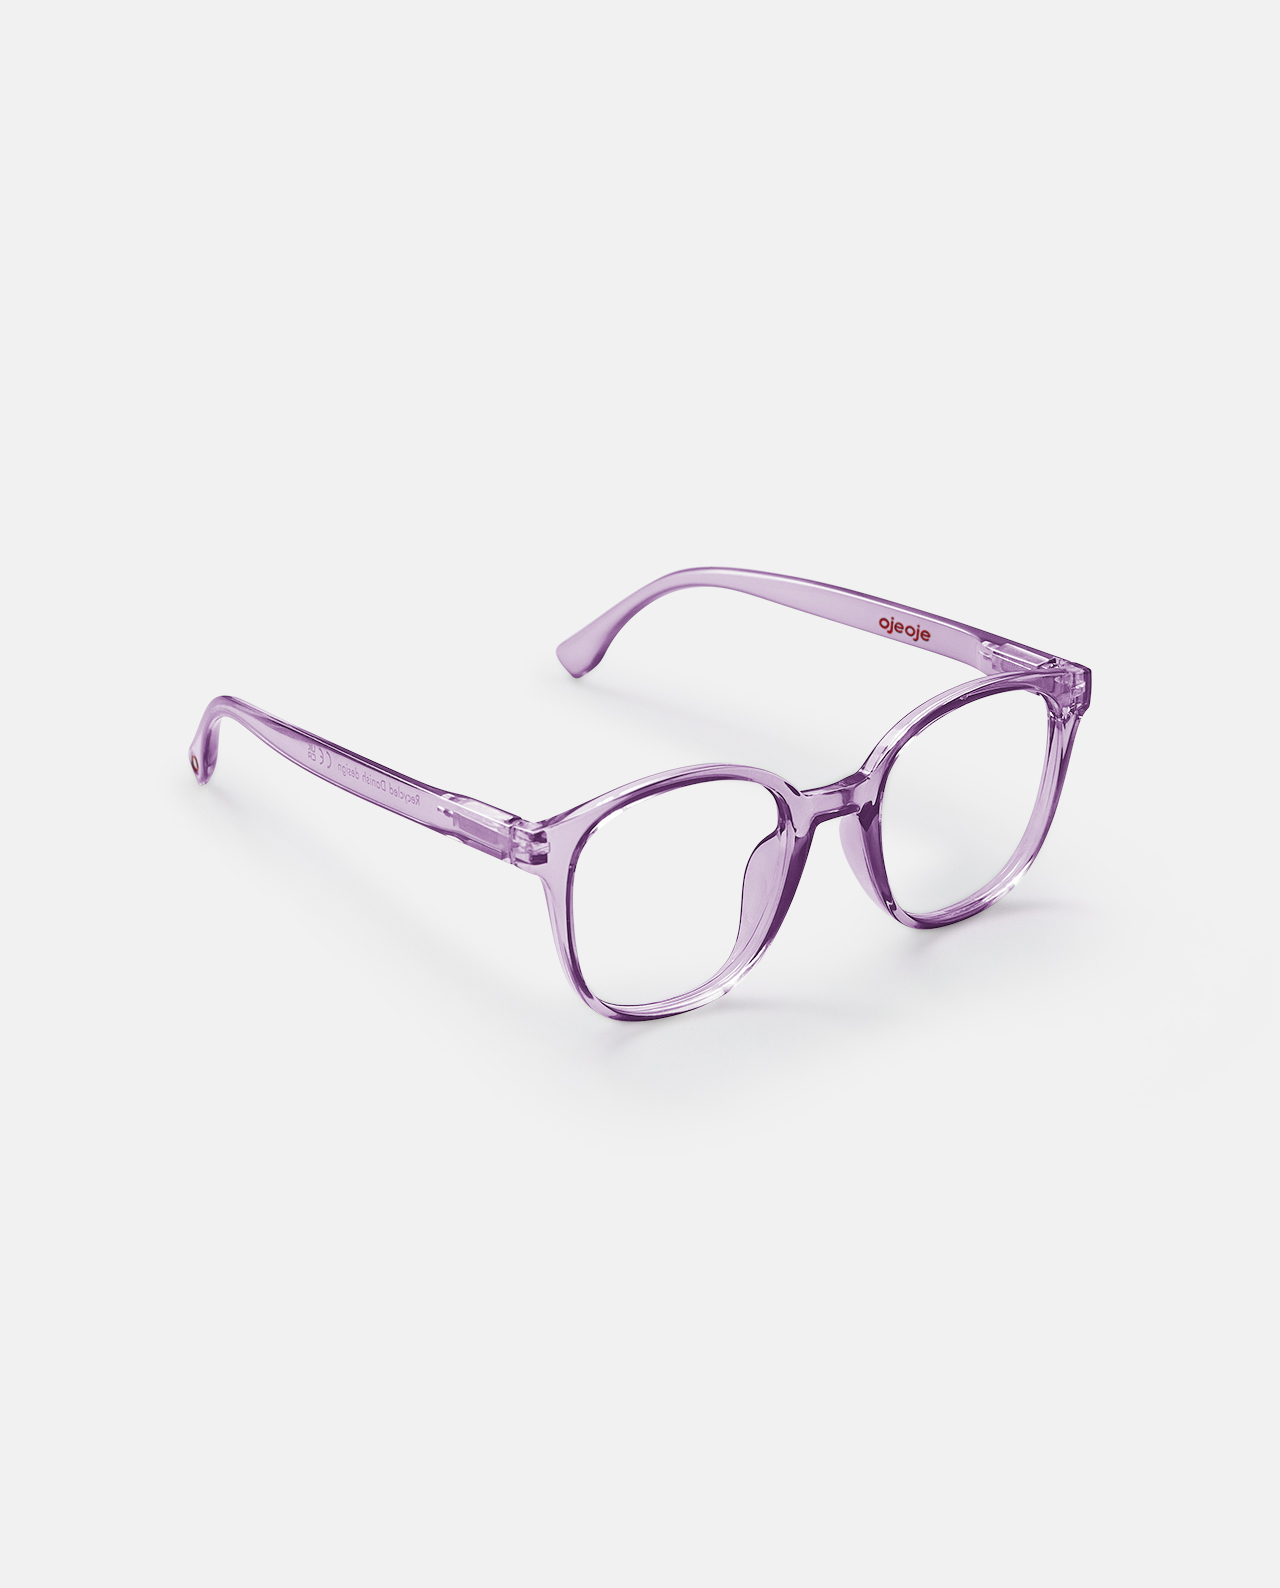 Læsebriller fra OjeOje – Lilla (Model B)